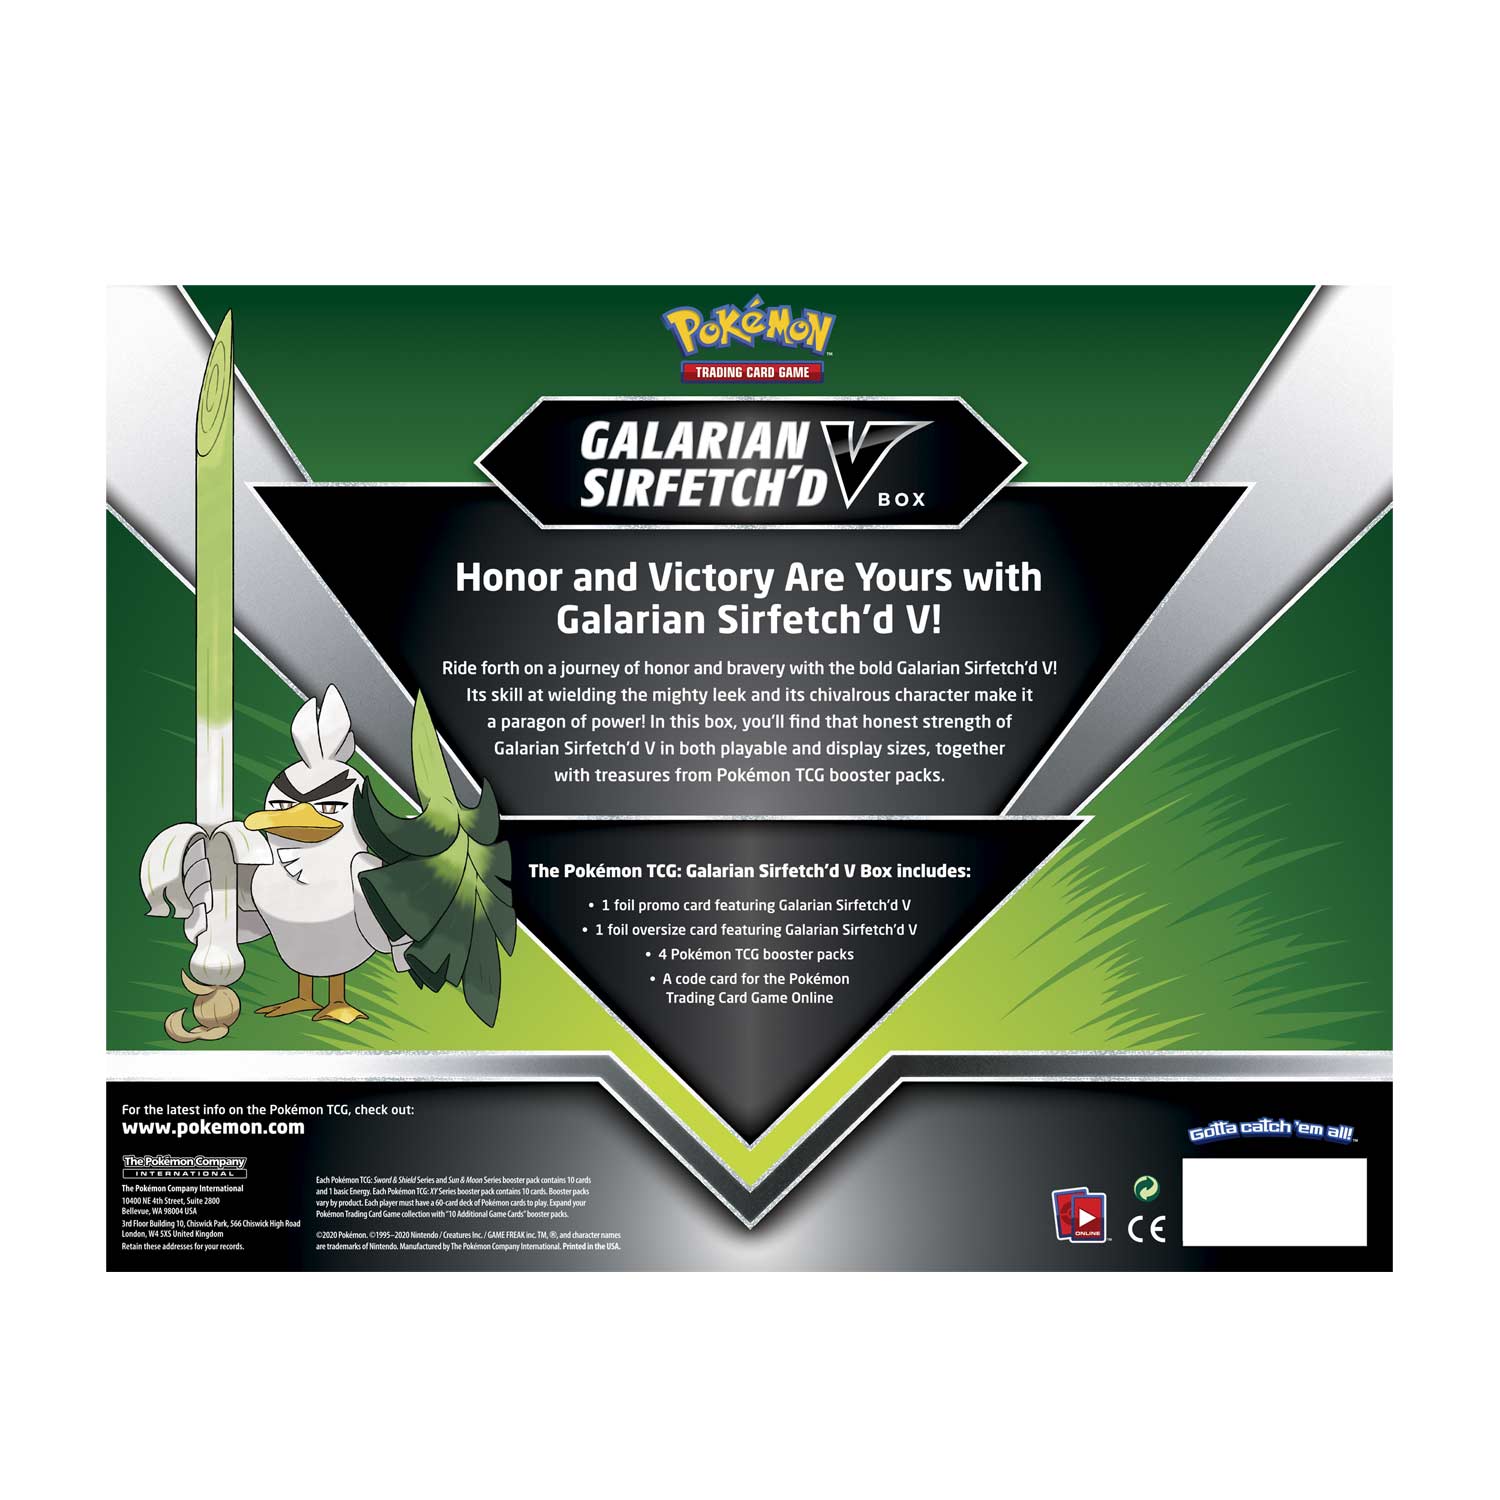 Pokémon Sword & Shield: Galarian Sirfetch'd V Box